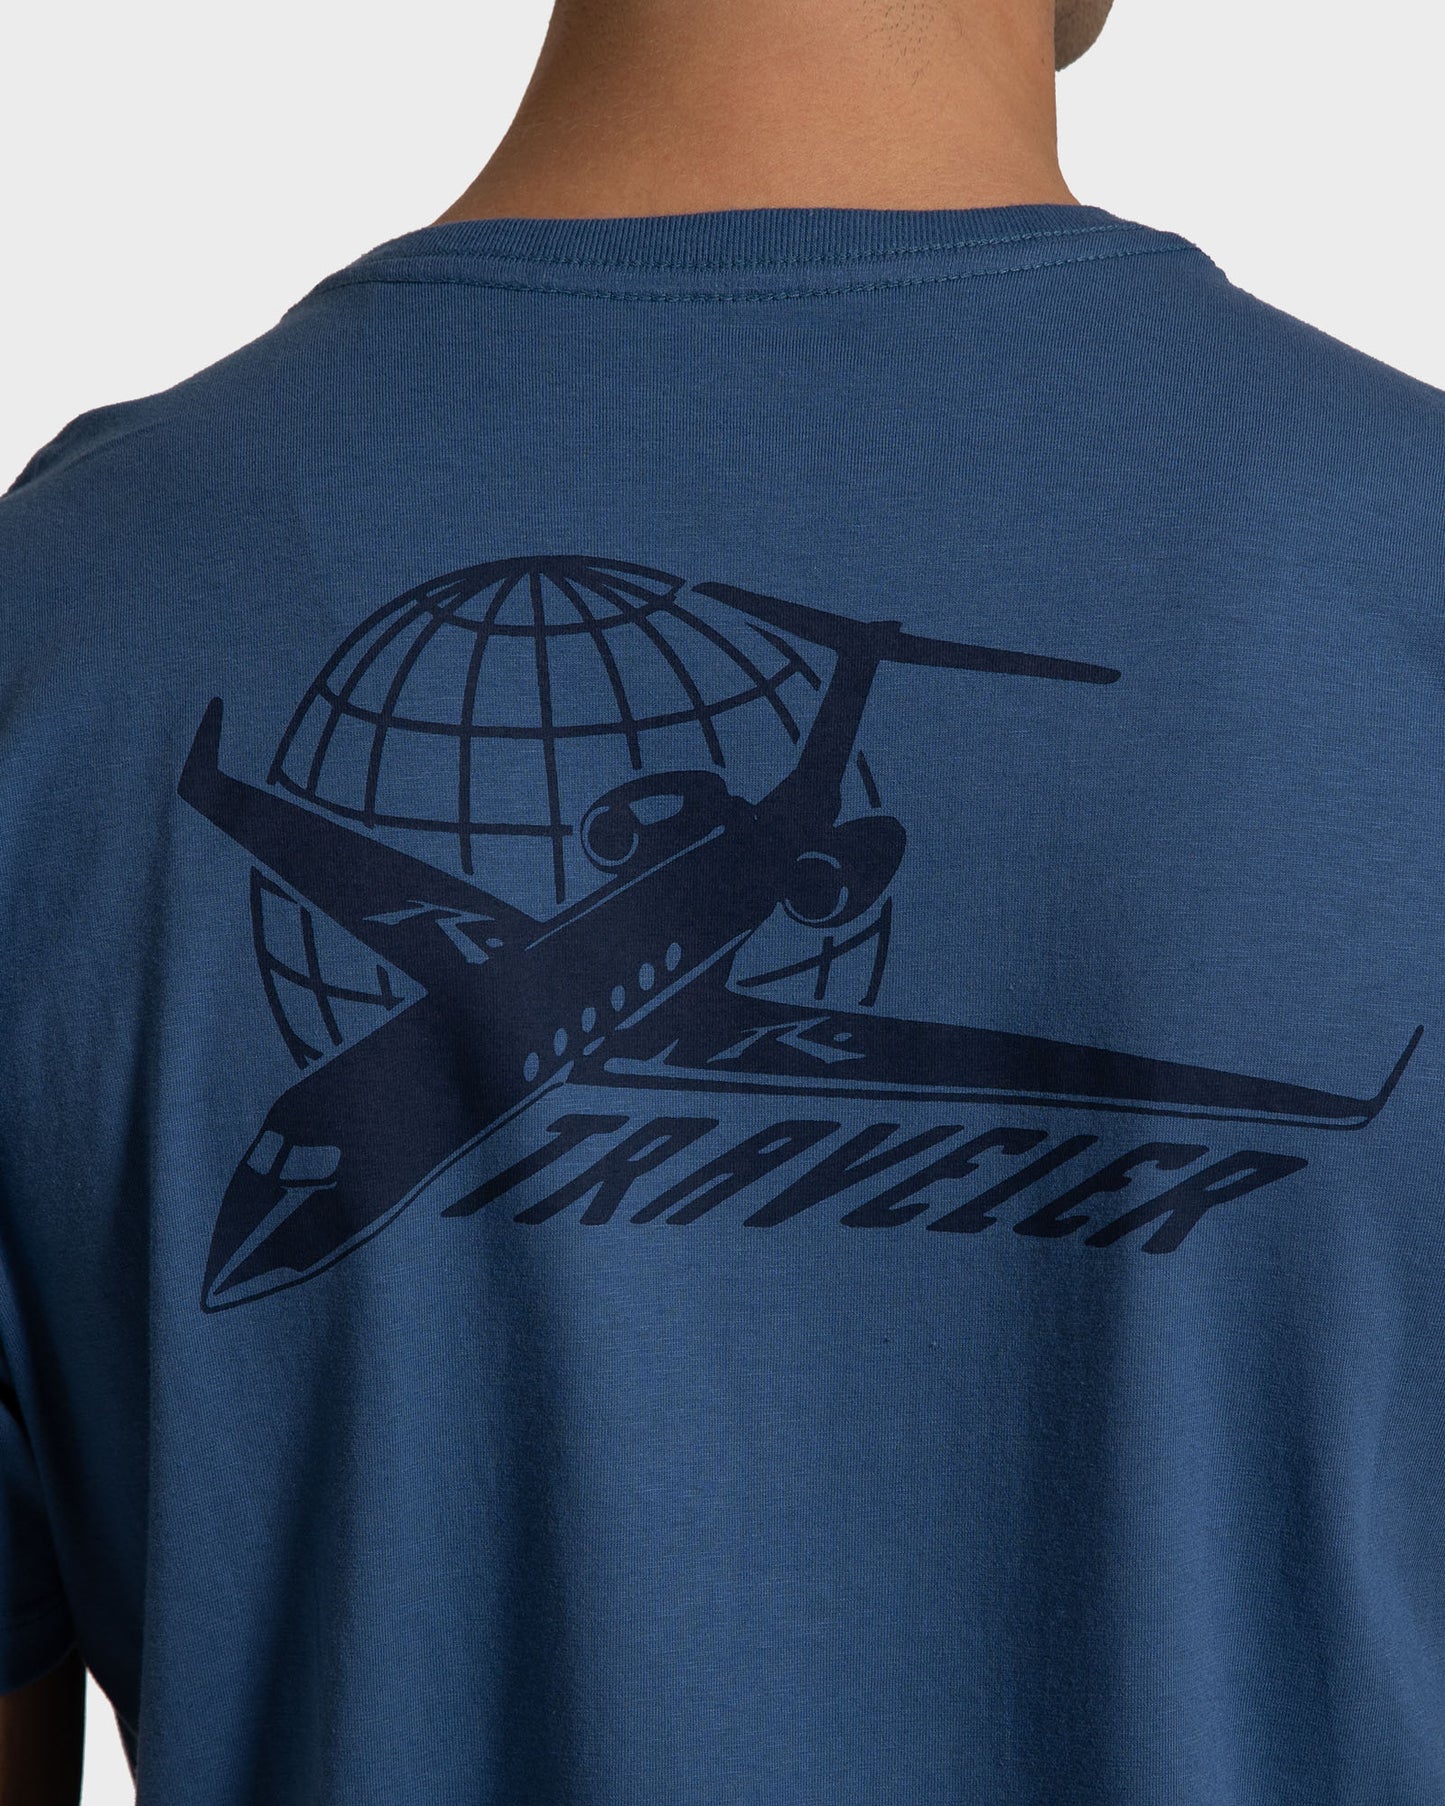 Camiseta Rusty Traveler Azul